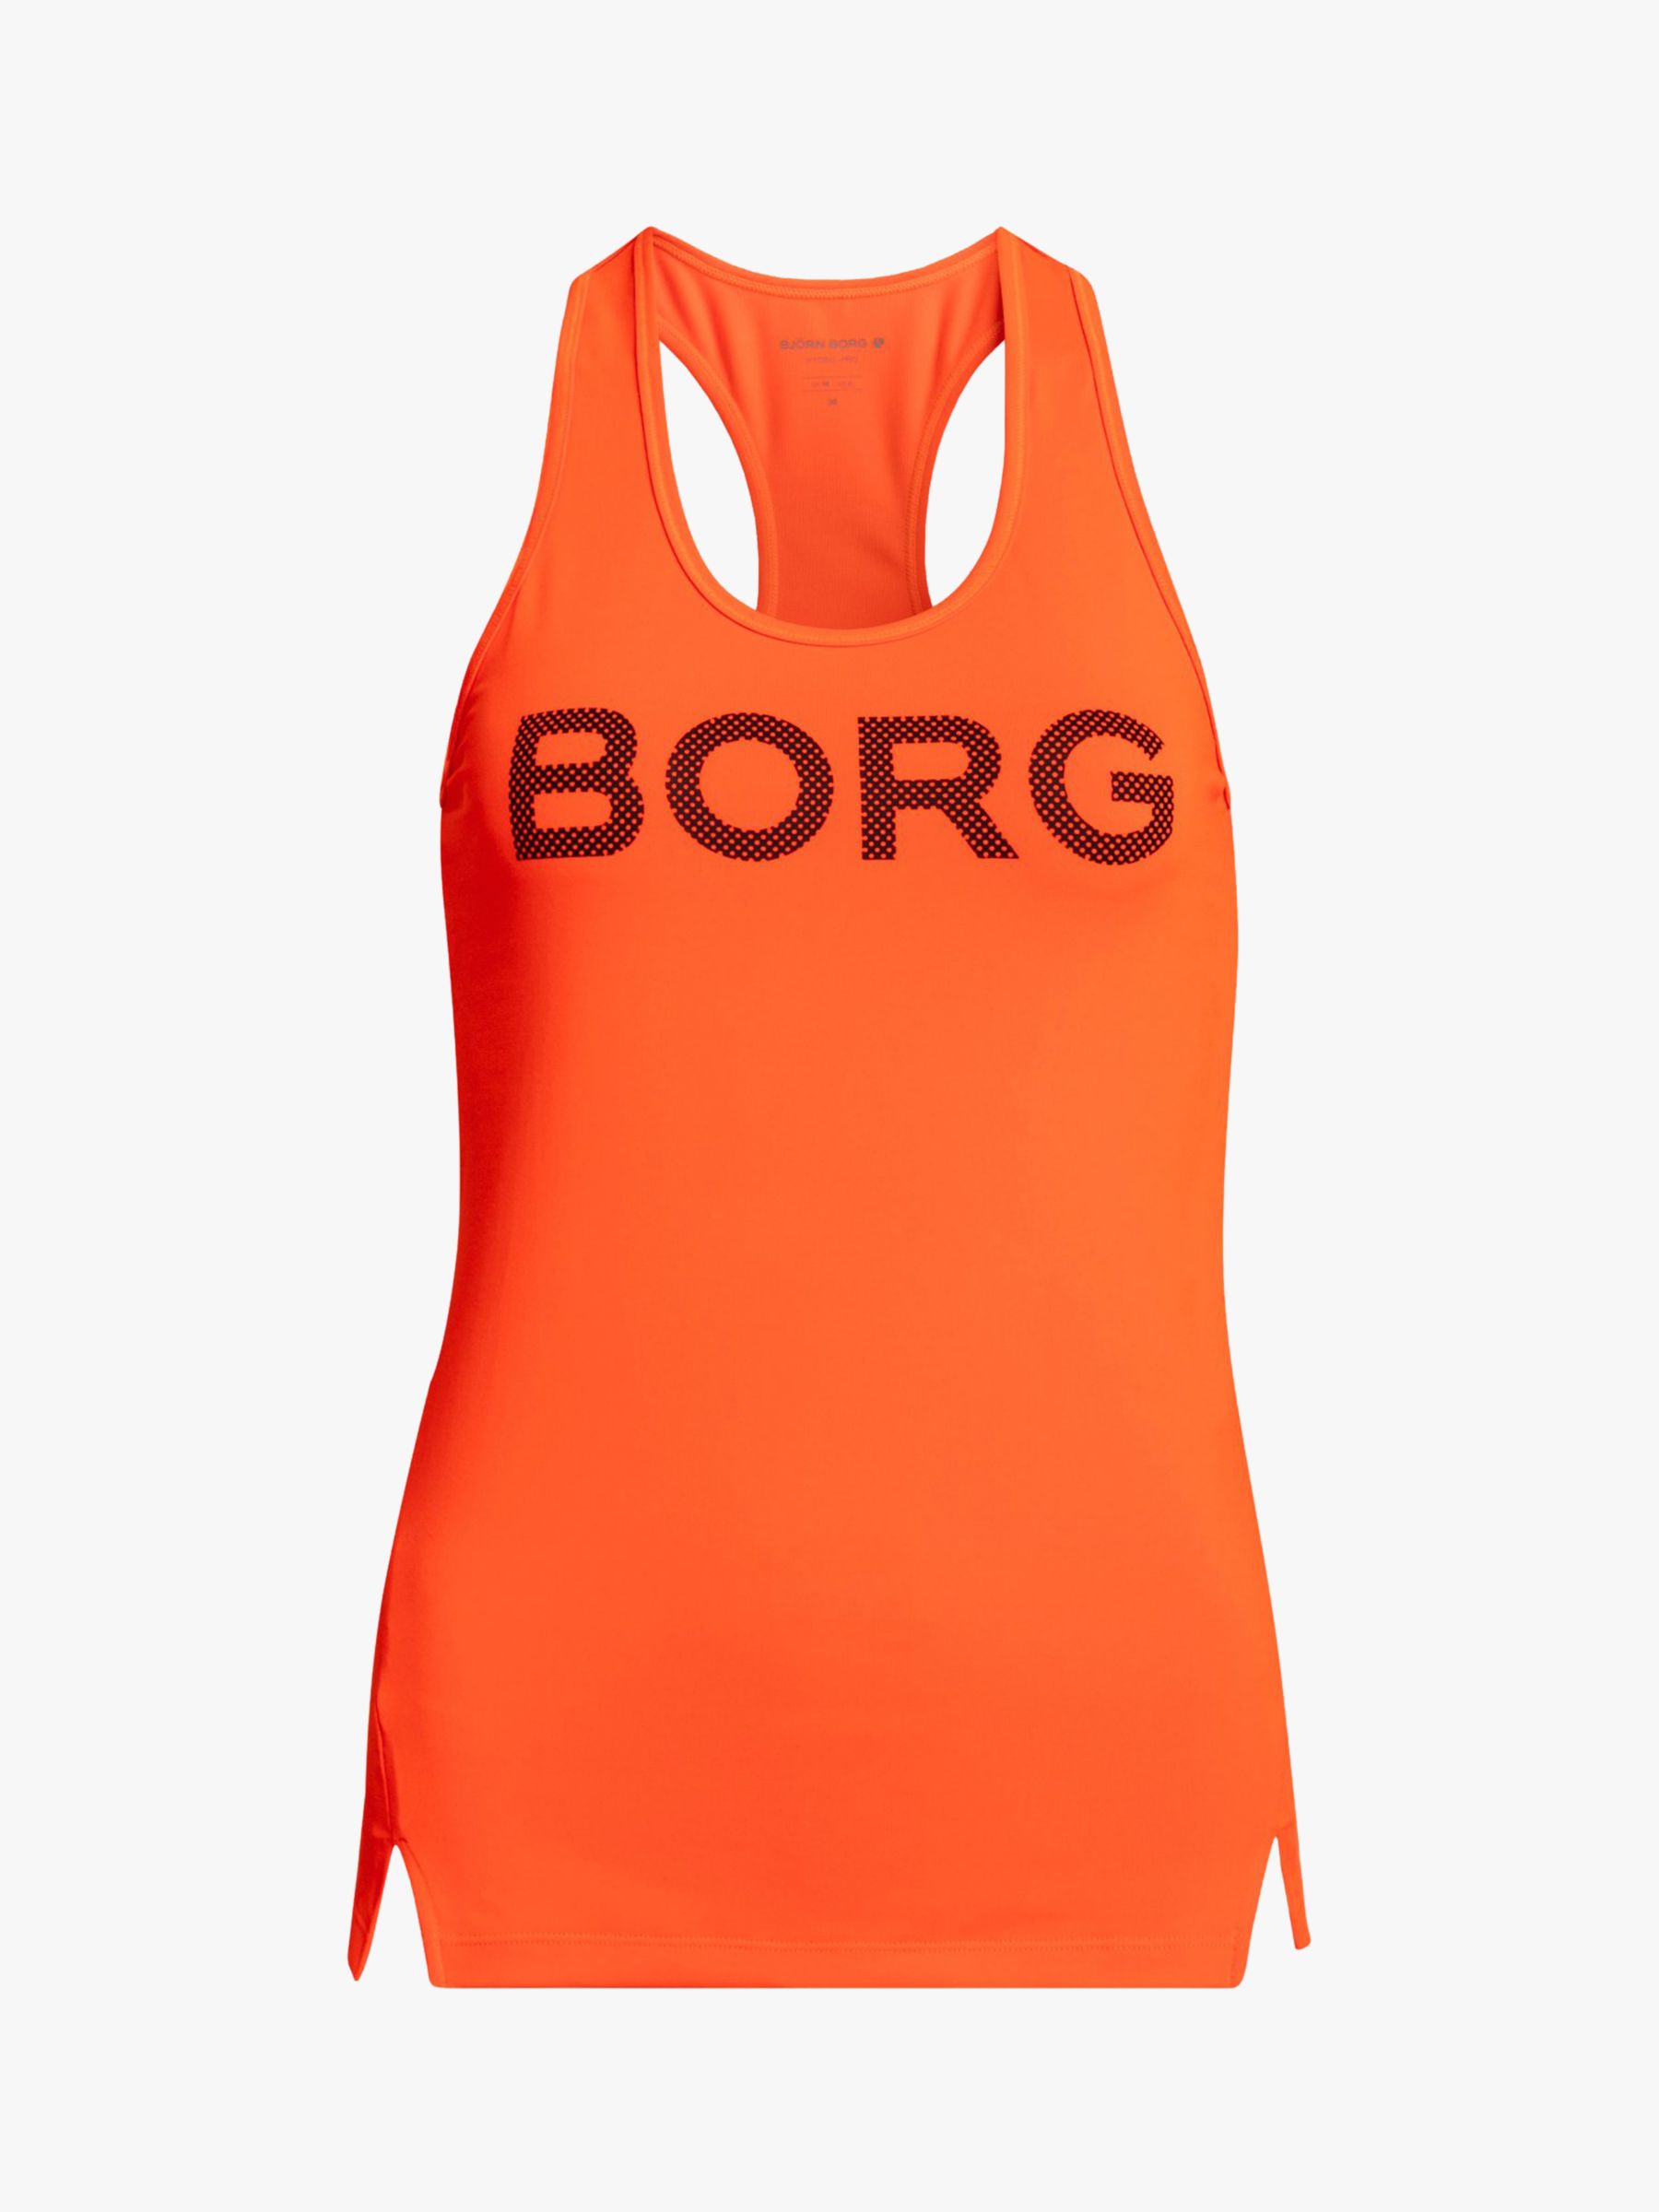 Björn Borg Cle Training Tank Top, Shocking Orange